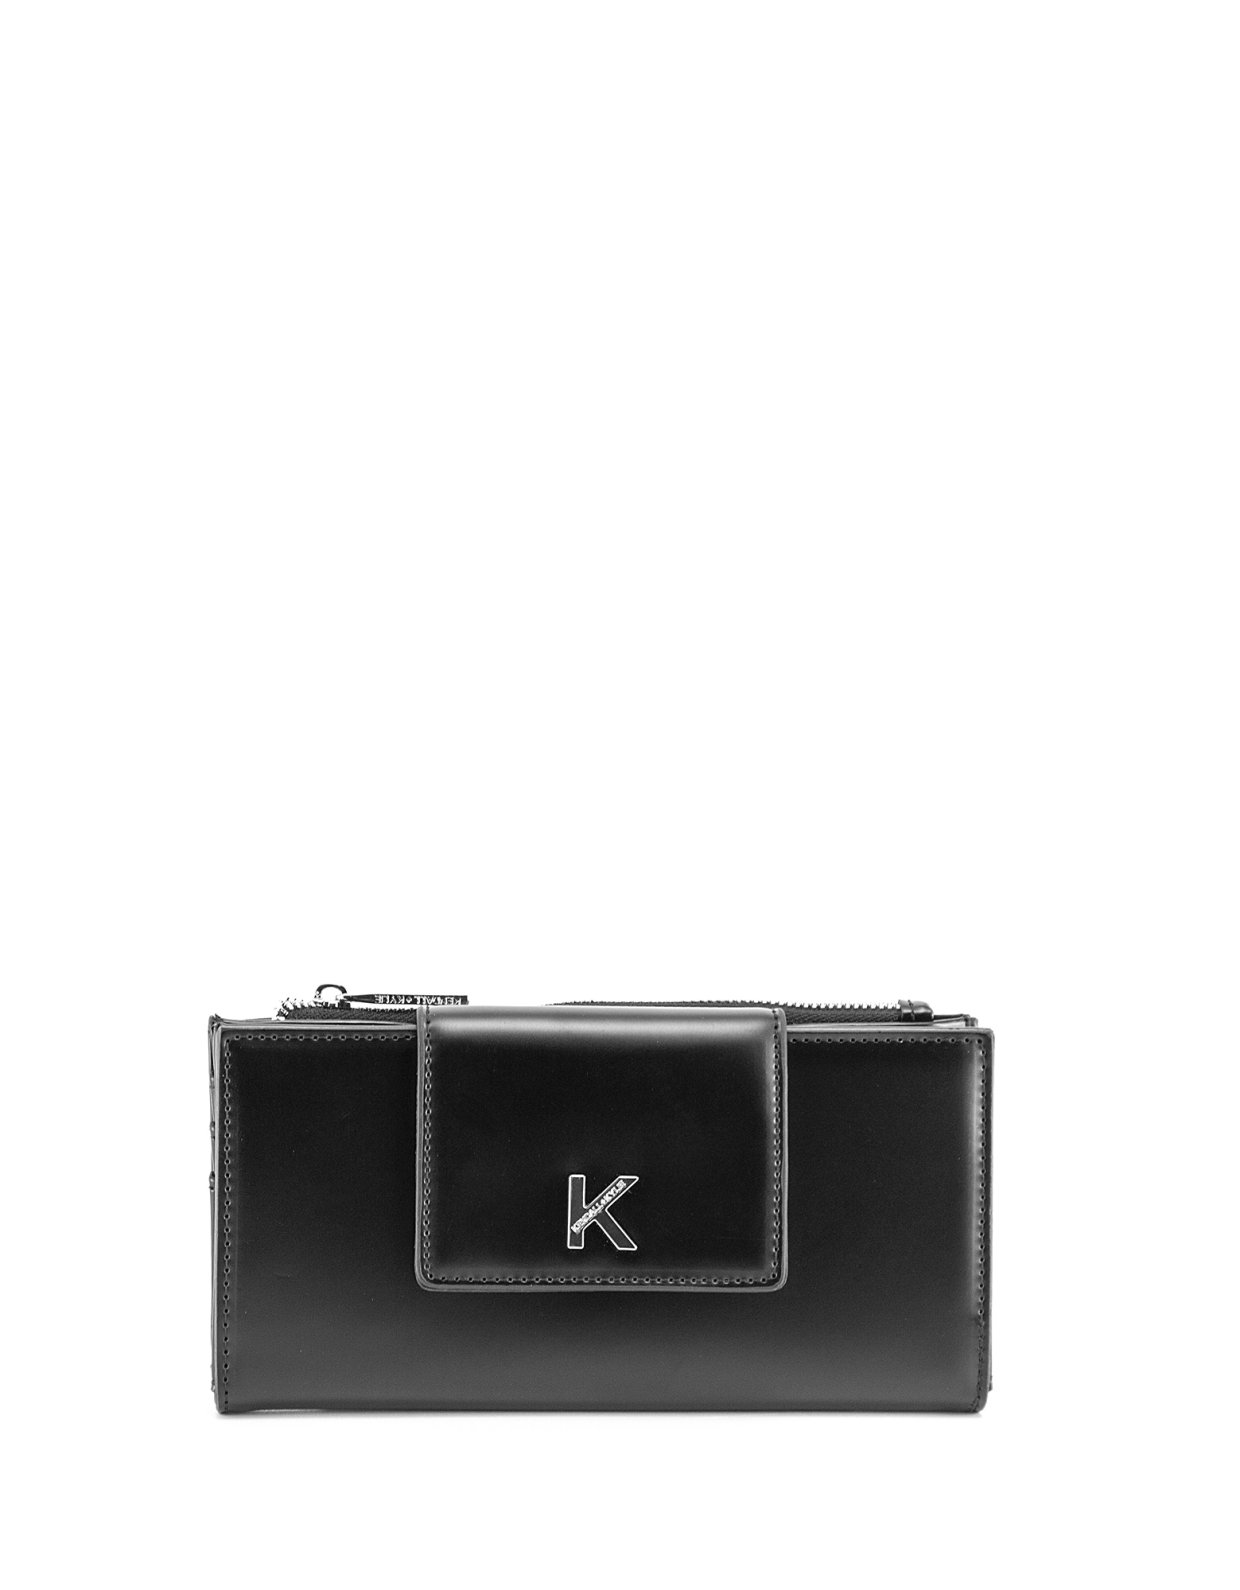 Kendall + Kylie Malibu wallet crossbody black